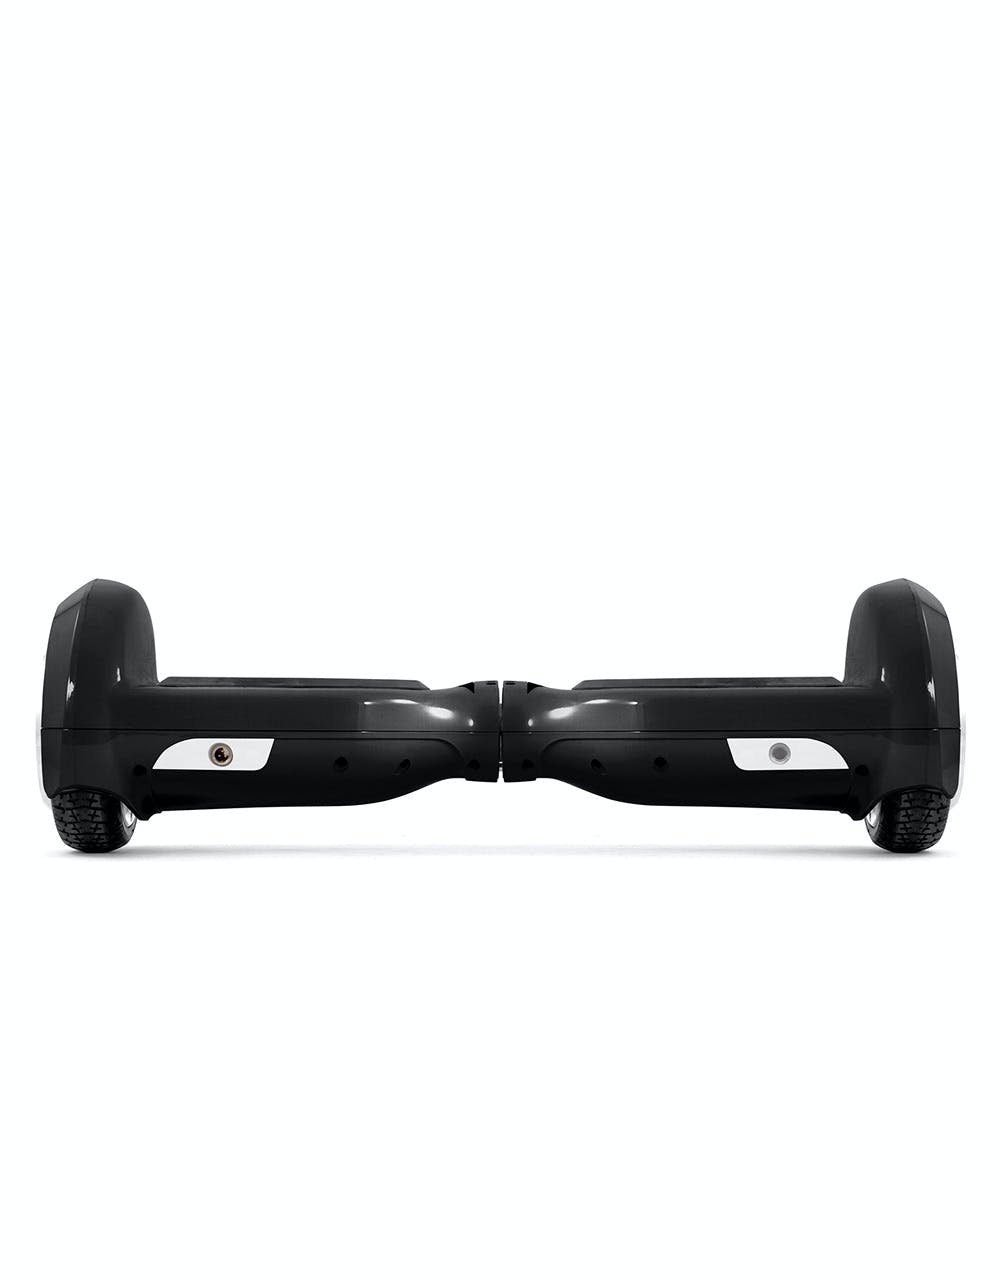 Frenzy Balance Board Scooter - Black